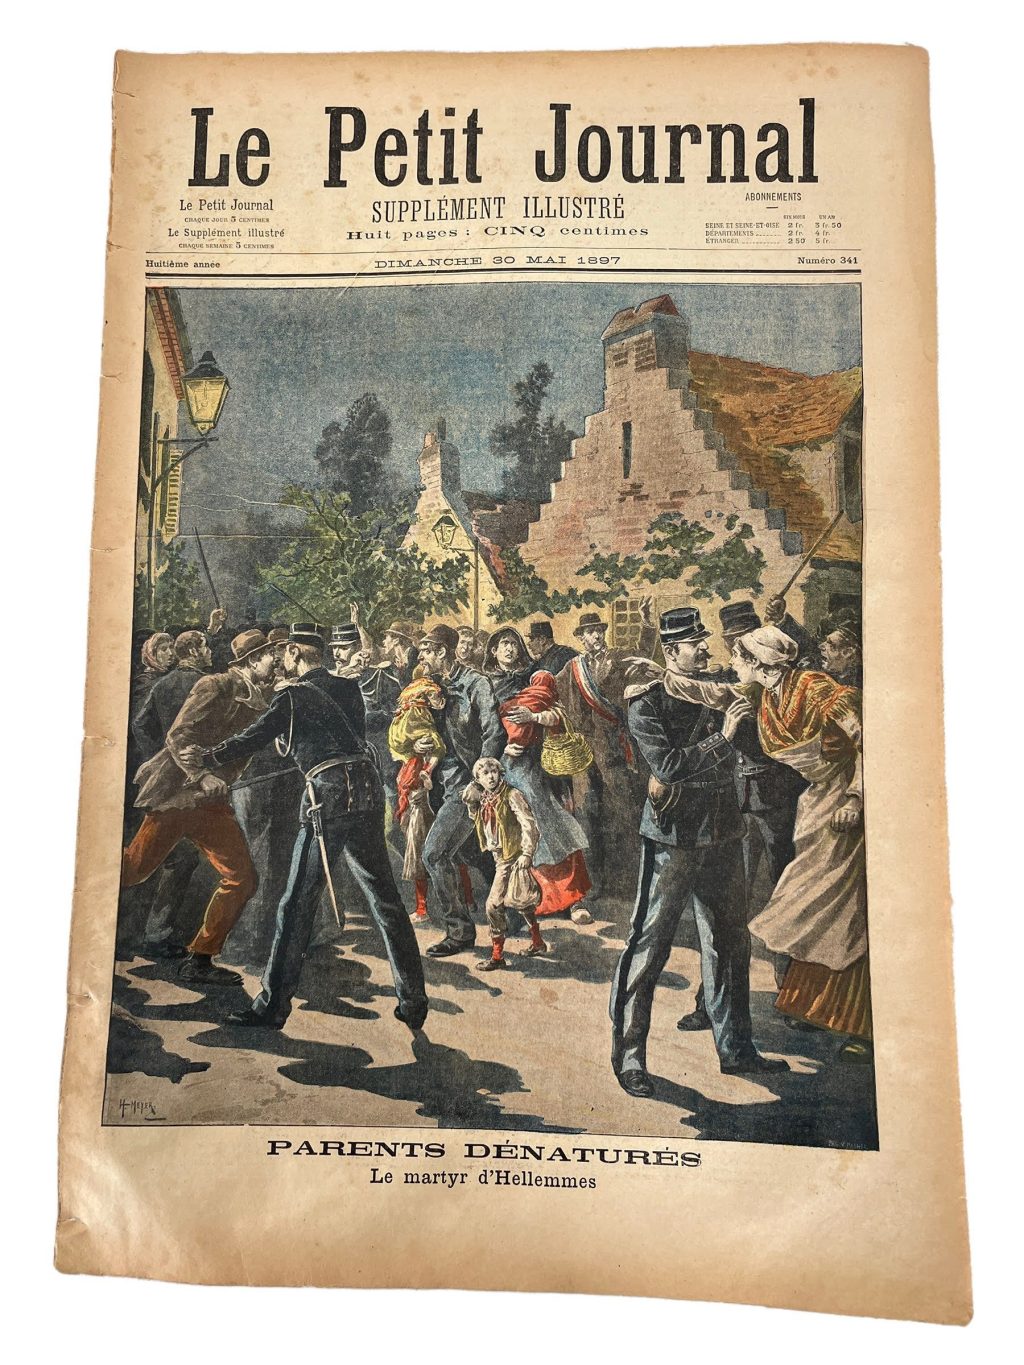 Antique French Le Petit Journal Newspaper Supplement Illustre Number 341 30/5/1897 Illustrations 8 Pages Memorabilia Collector c1897